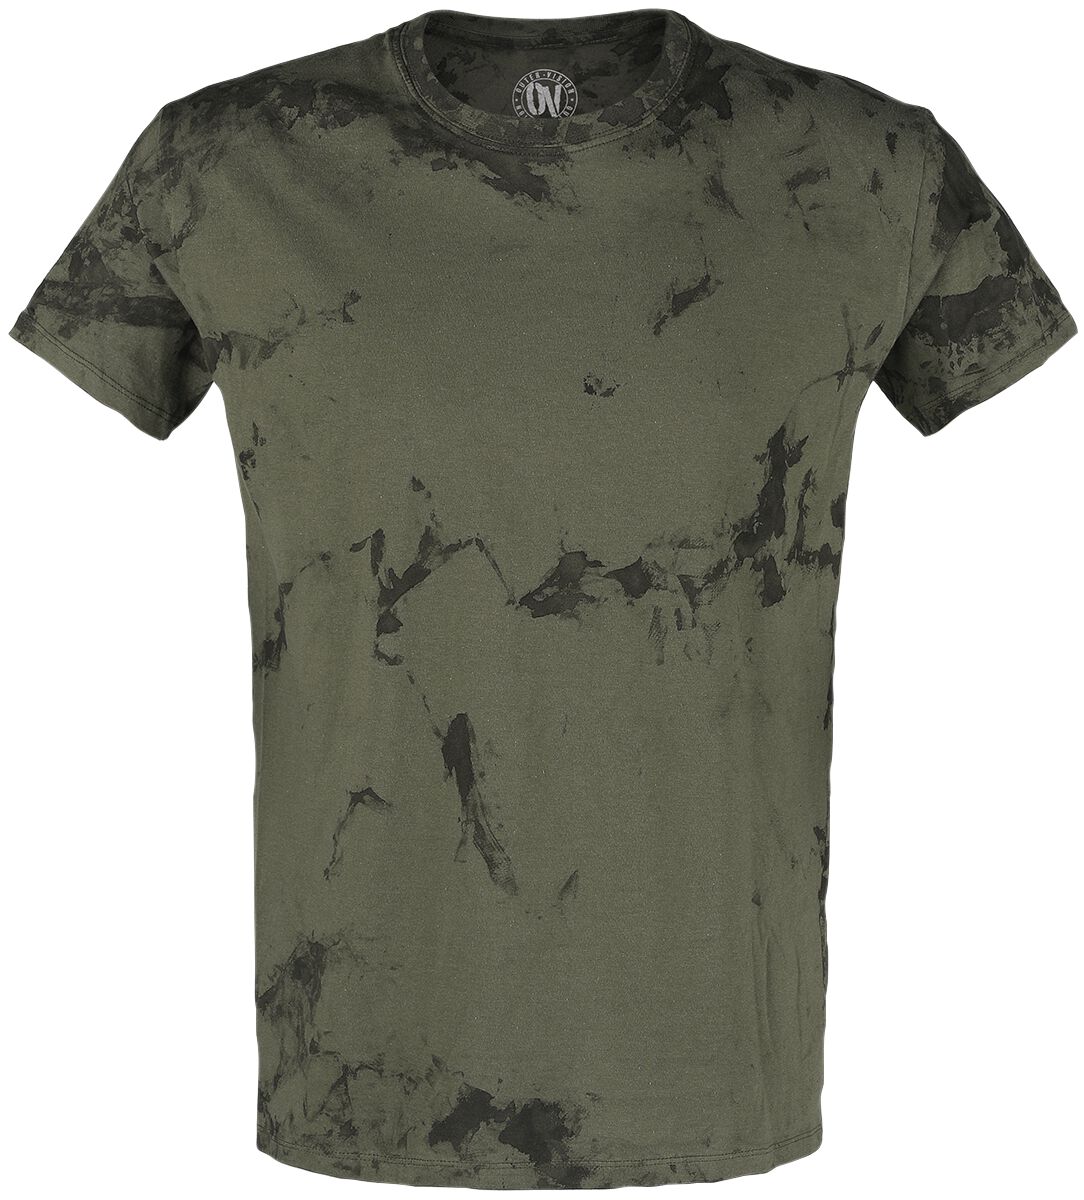 Outer Vision T-Shirt - Man`s T-Shirt - S bis XXL - für Männer - Größe S - khaki